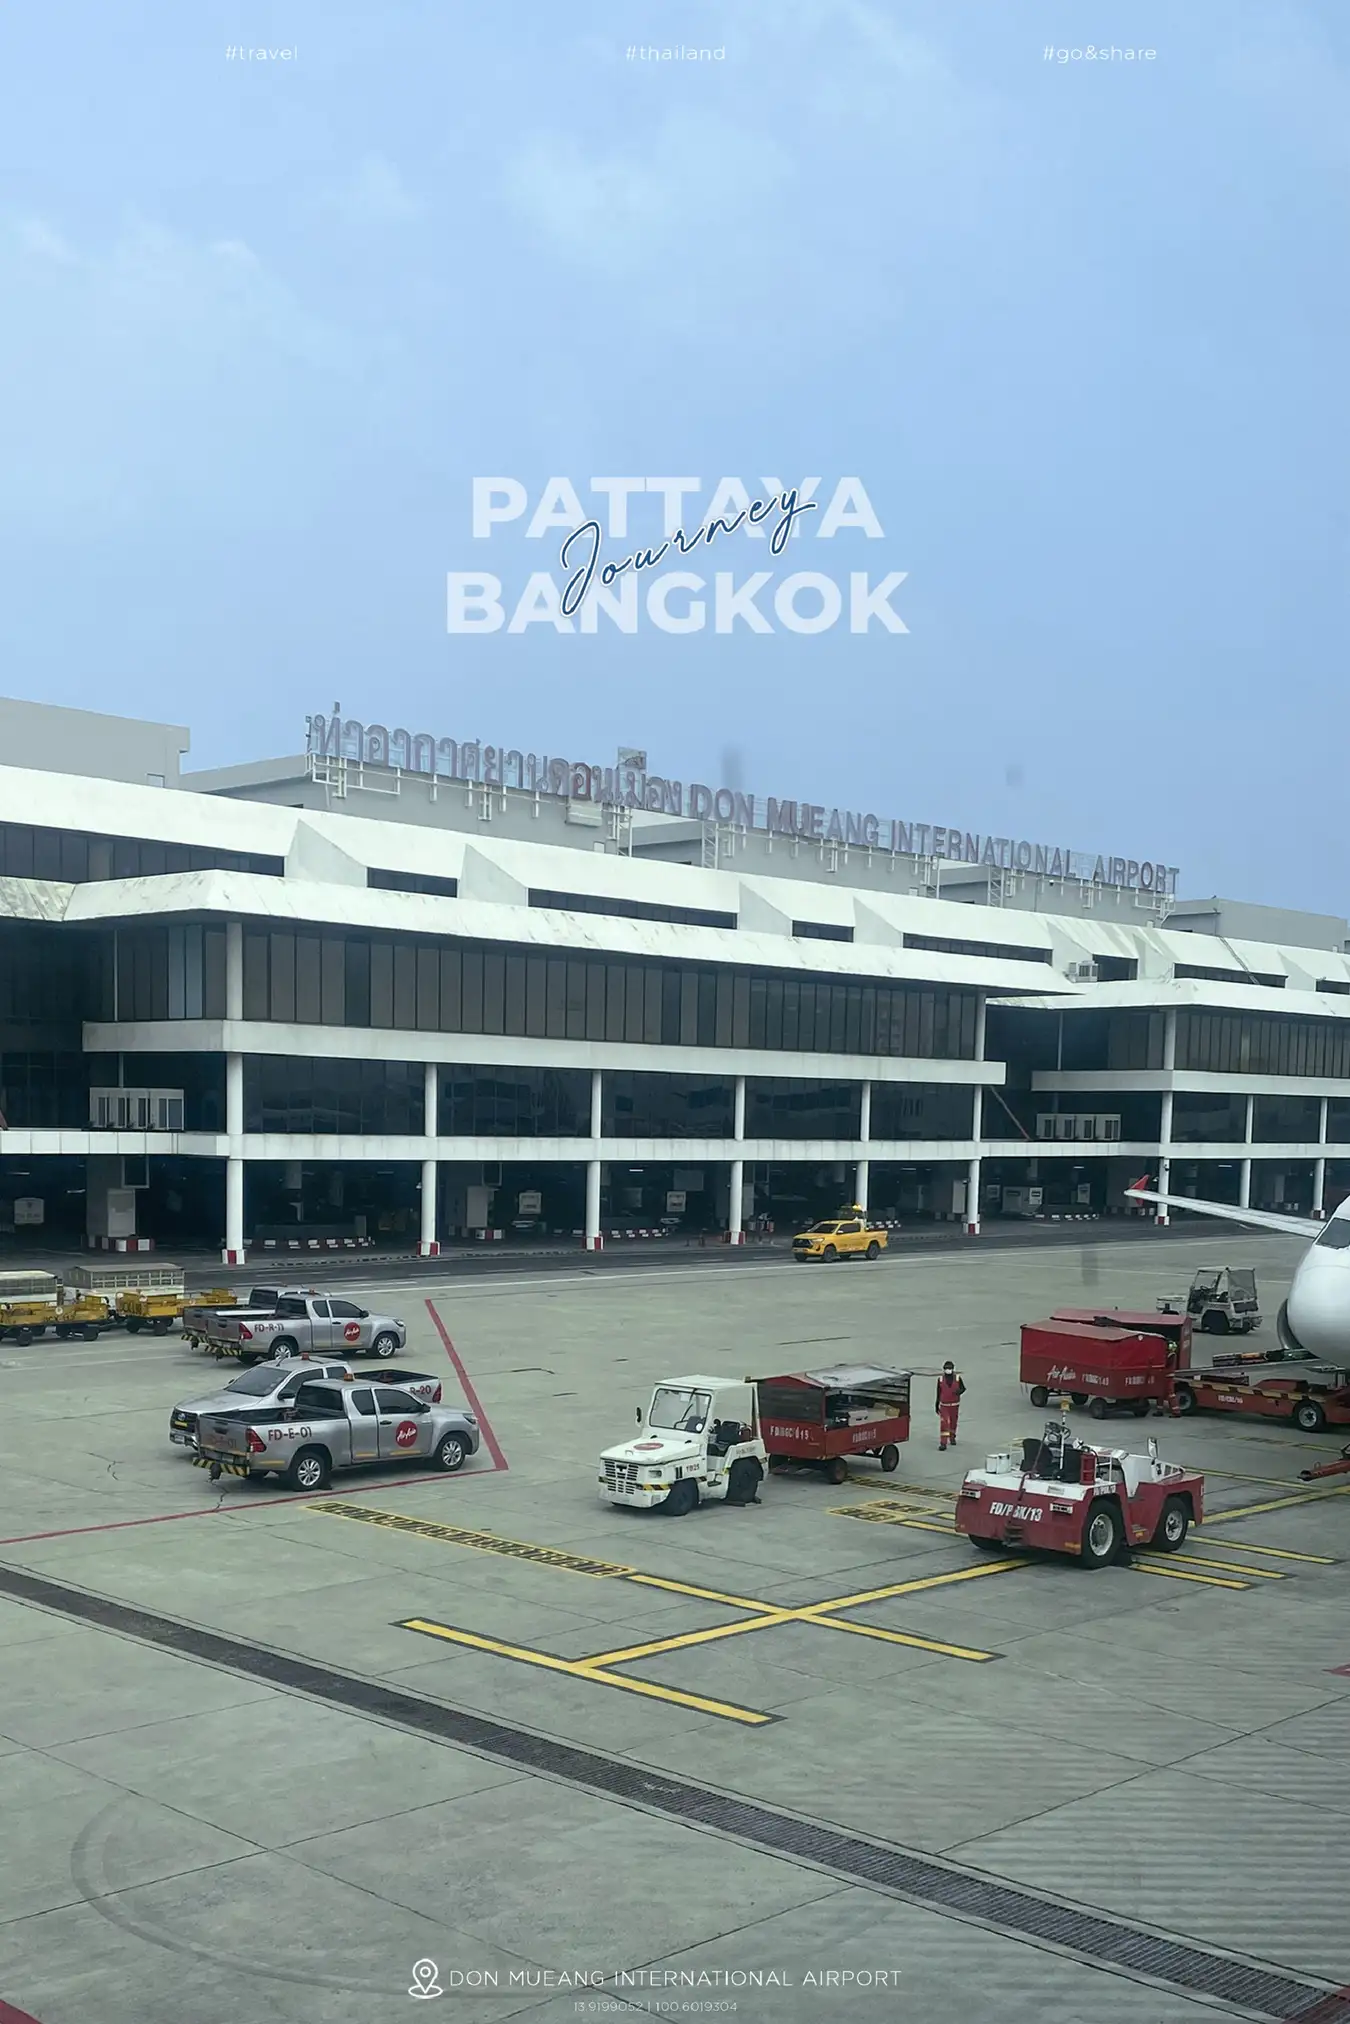 bangkok pattaya trip cost